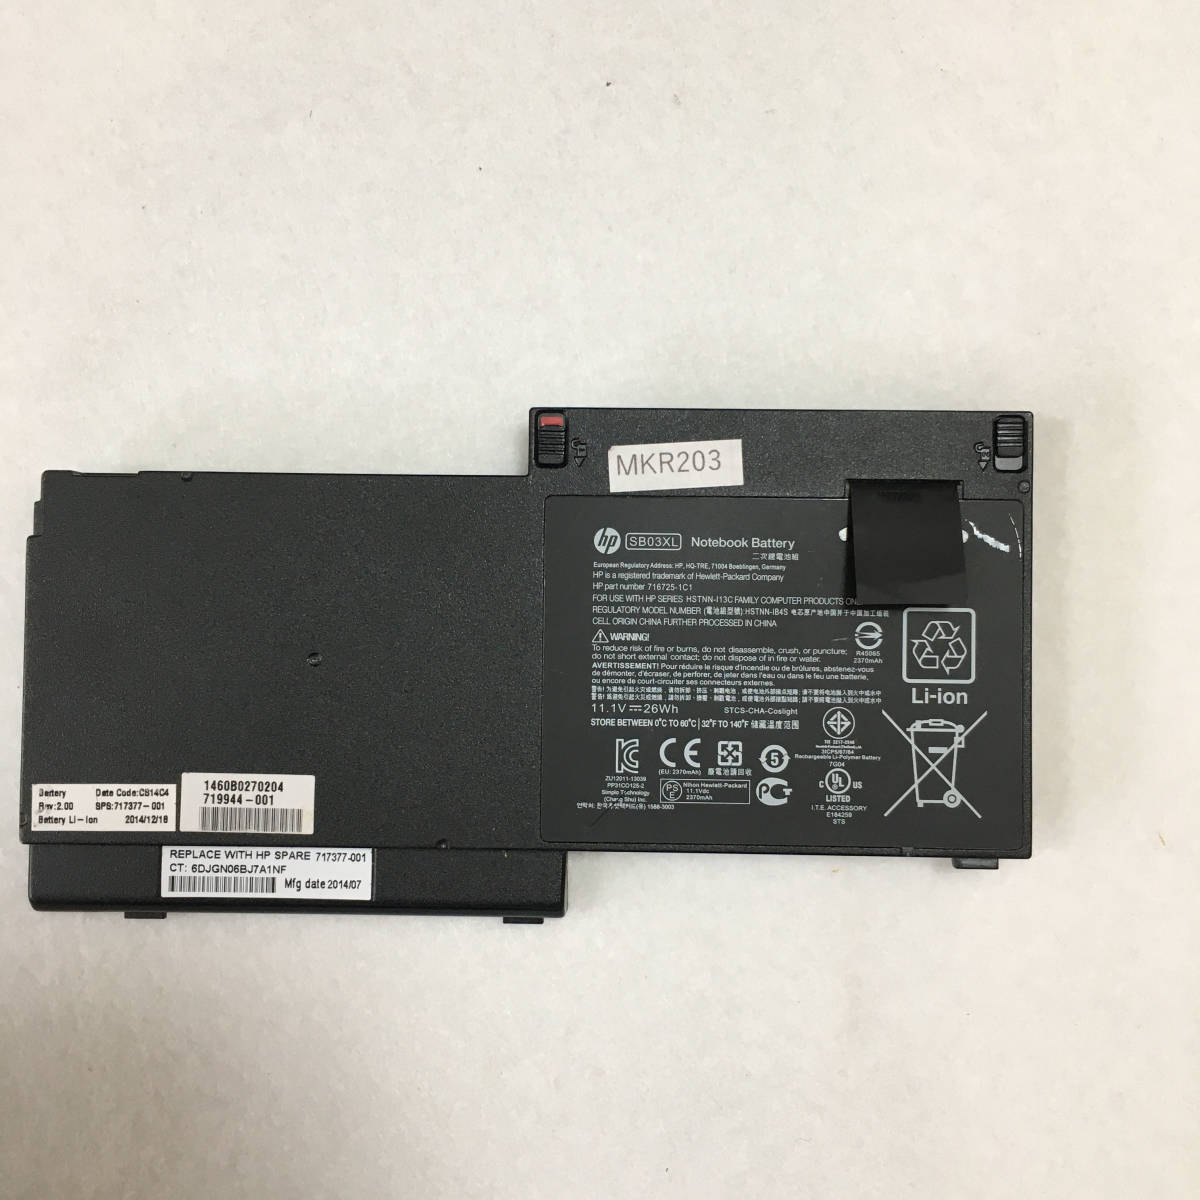 HP SB03XL / 717377-001 純正バッテリー 中古品 動作未確認 MKR203の画像2